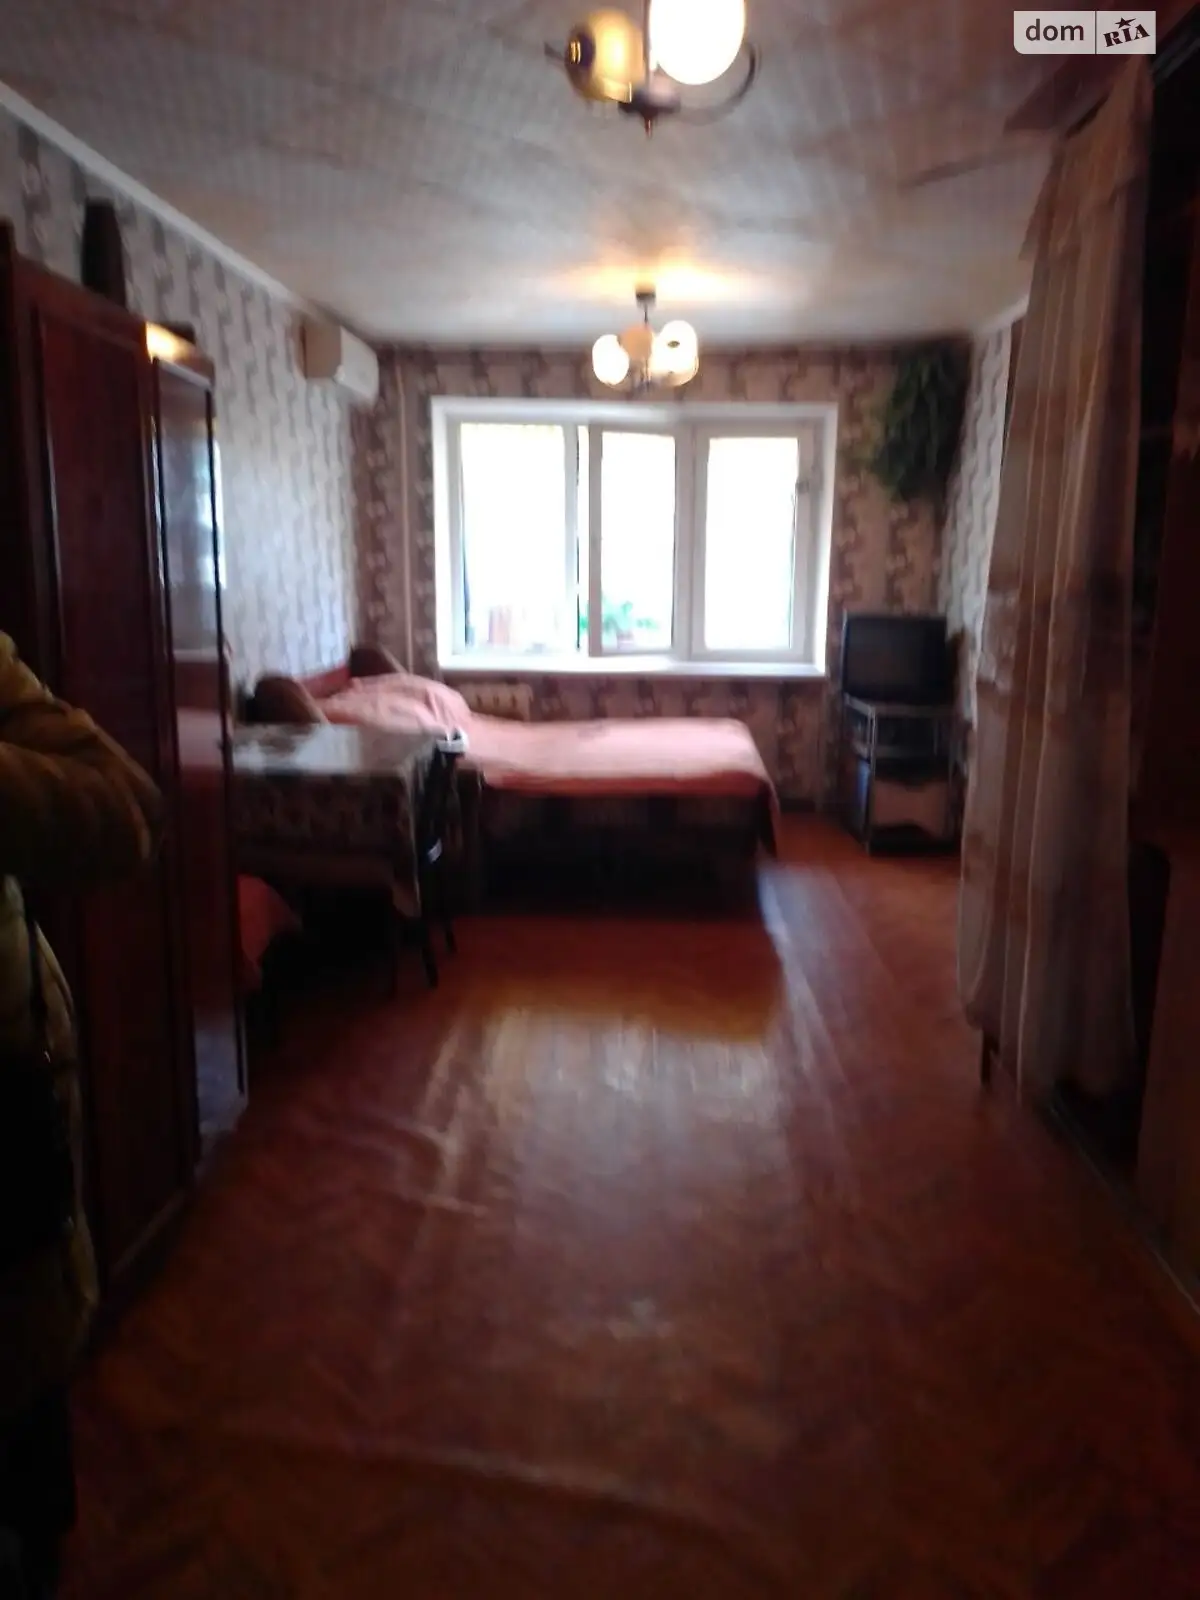 Продается комната 25 кв. м в Одессе, цена: 8000 $ - фото 1